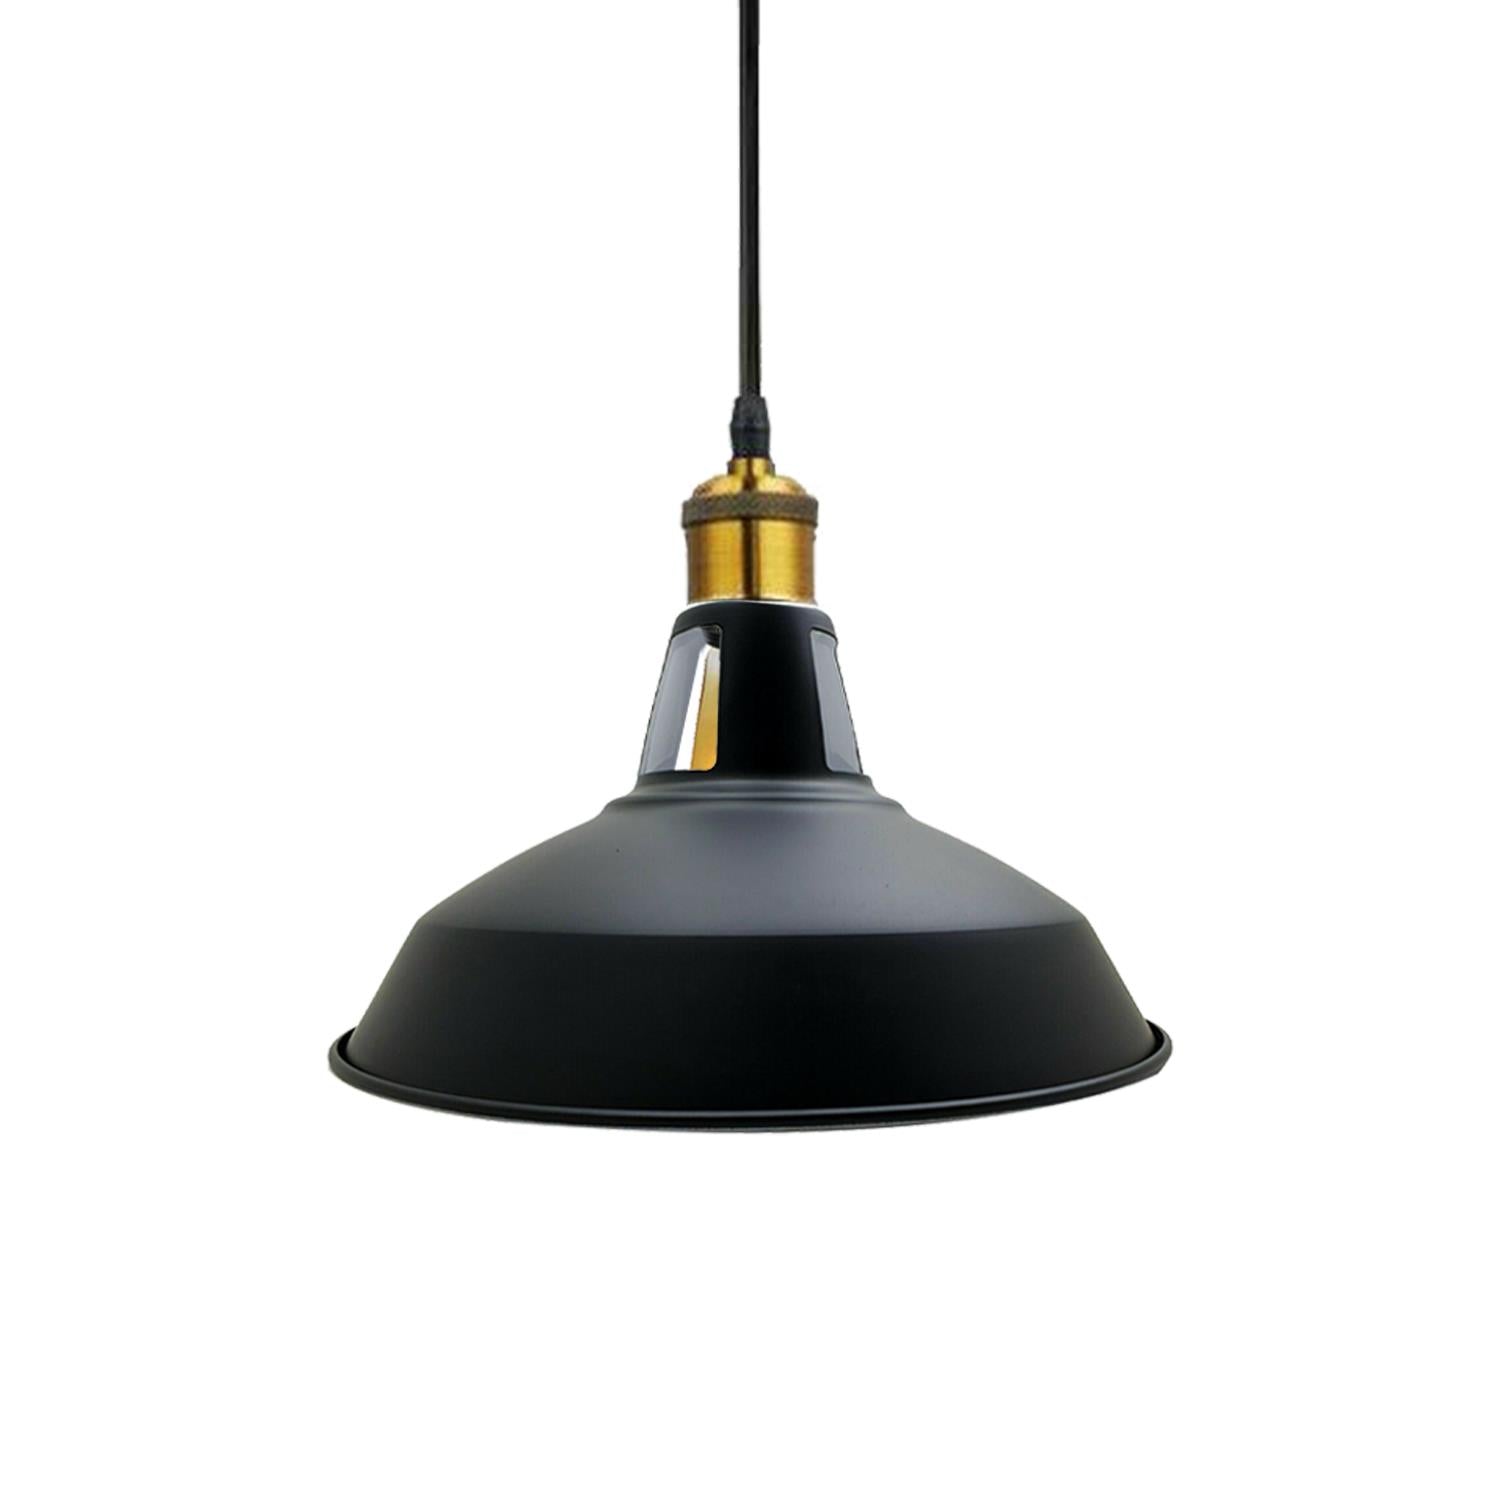 Retro Industrial Black Ceiling Pendant Light Metal Lamp Shade With 95cm Adjustable Cable~1354 - LEDSone UK Ltd